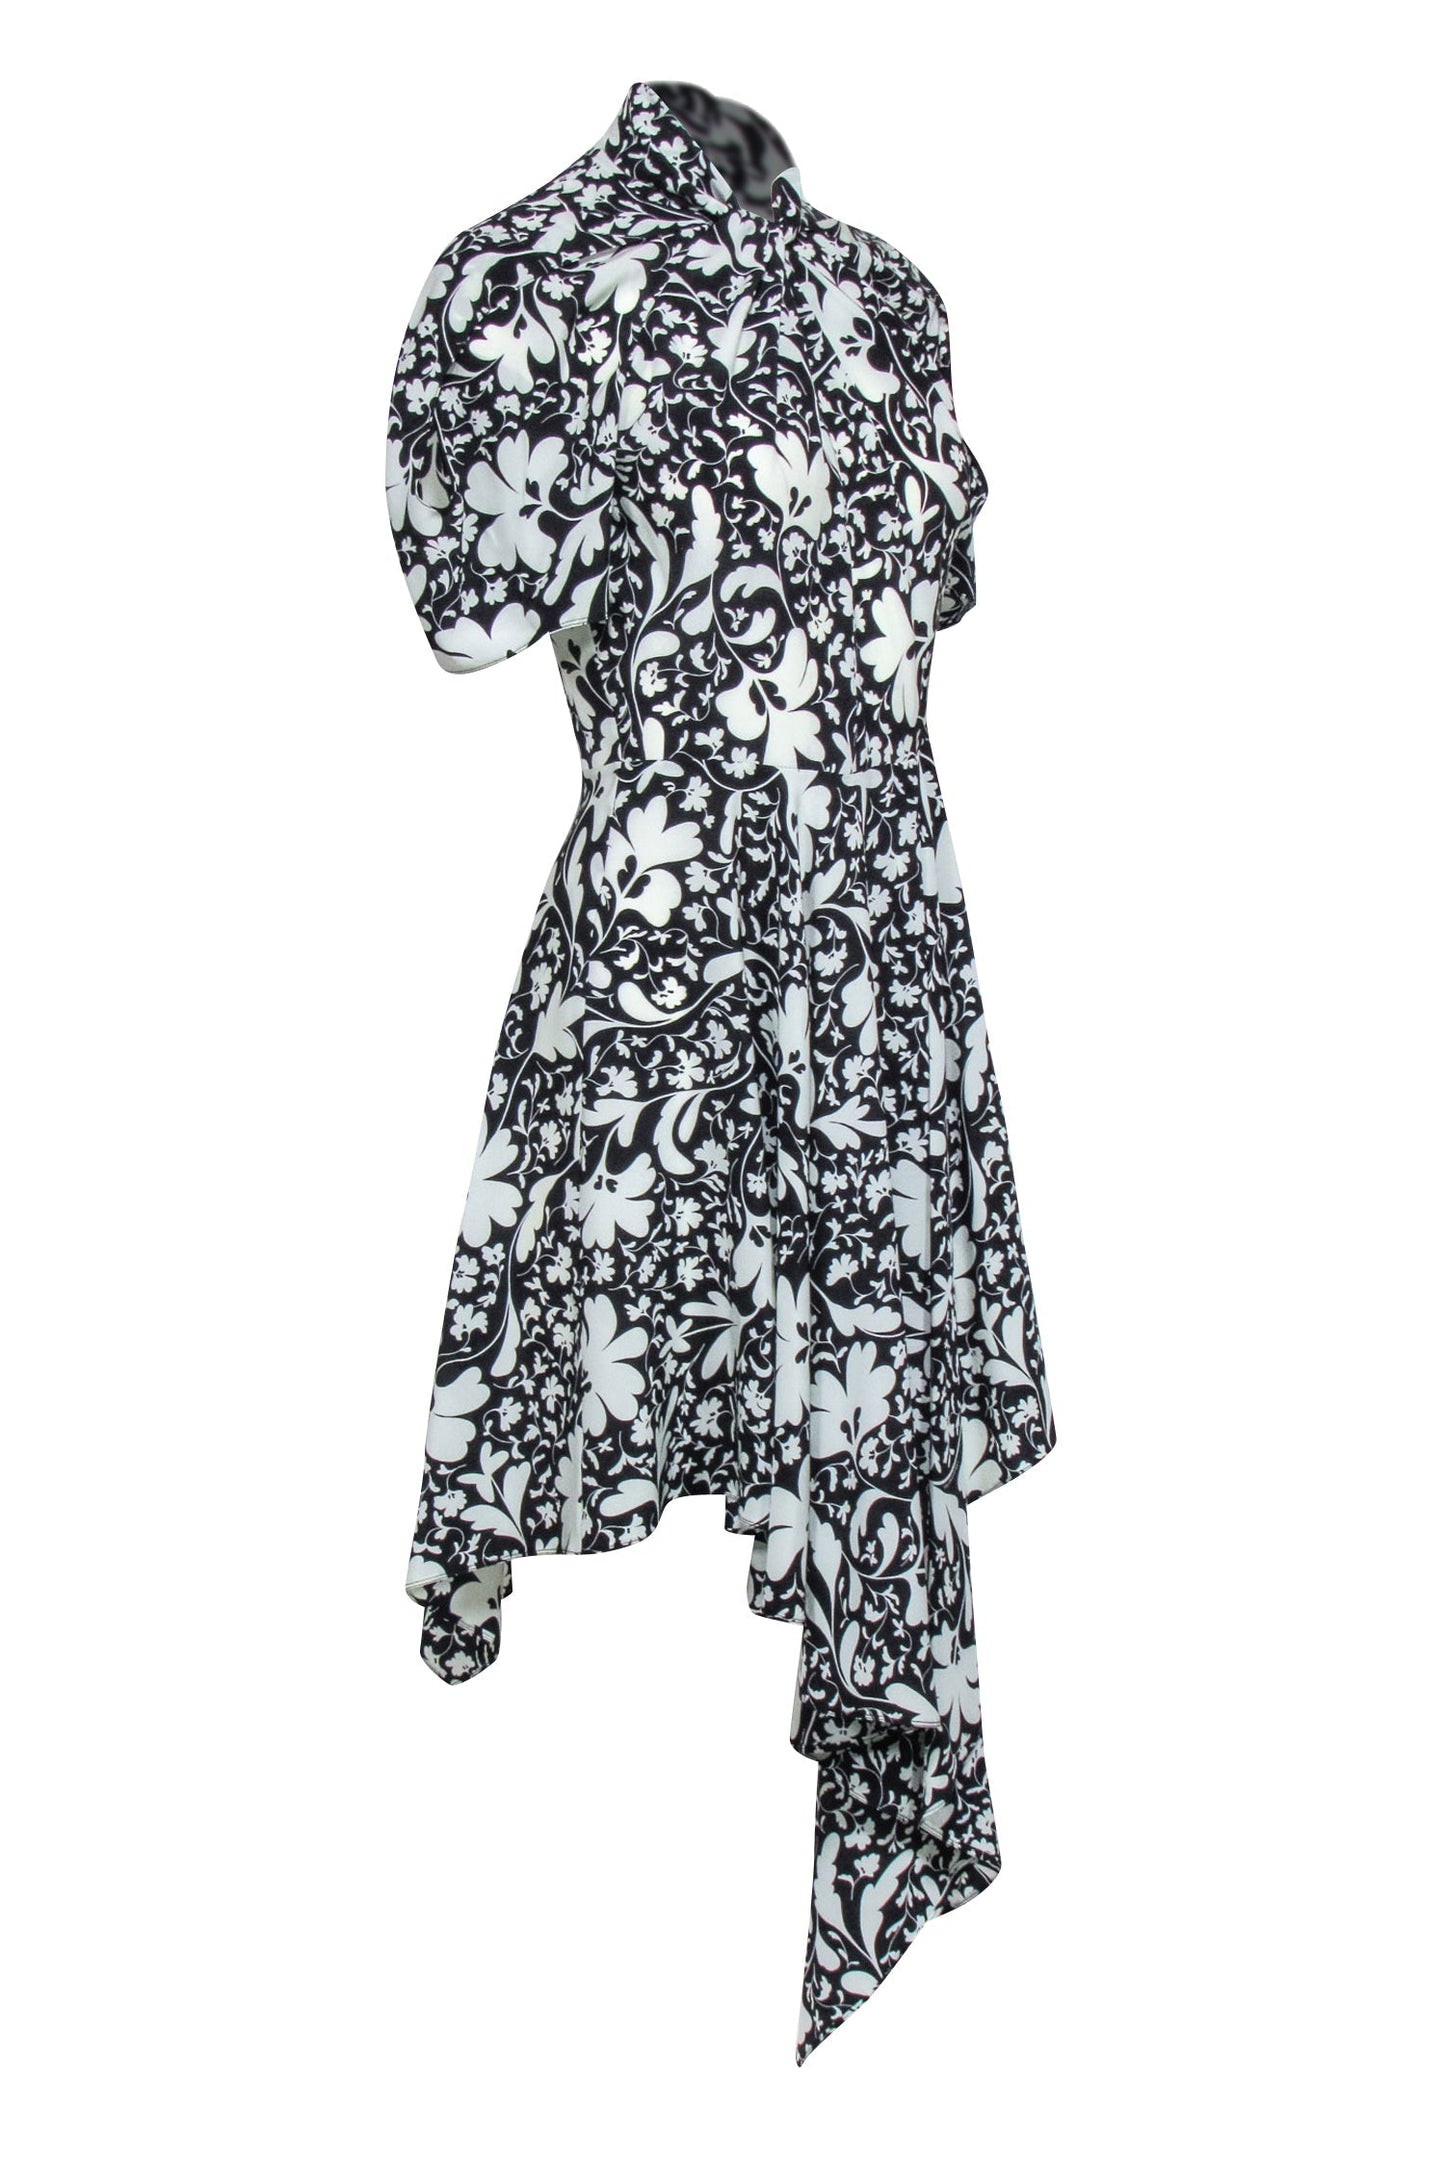 Stella McCartney - Black & Cream Floral Print Silk Dress Sz 2